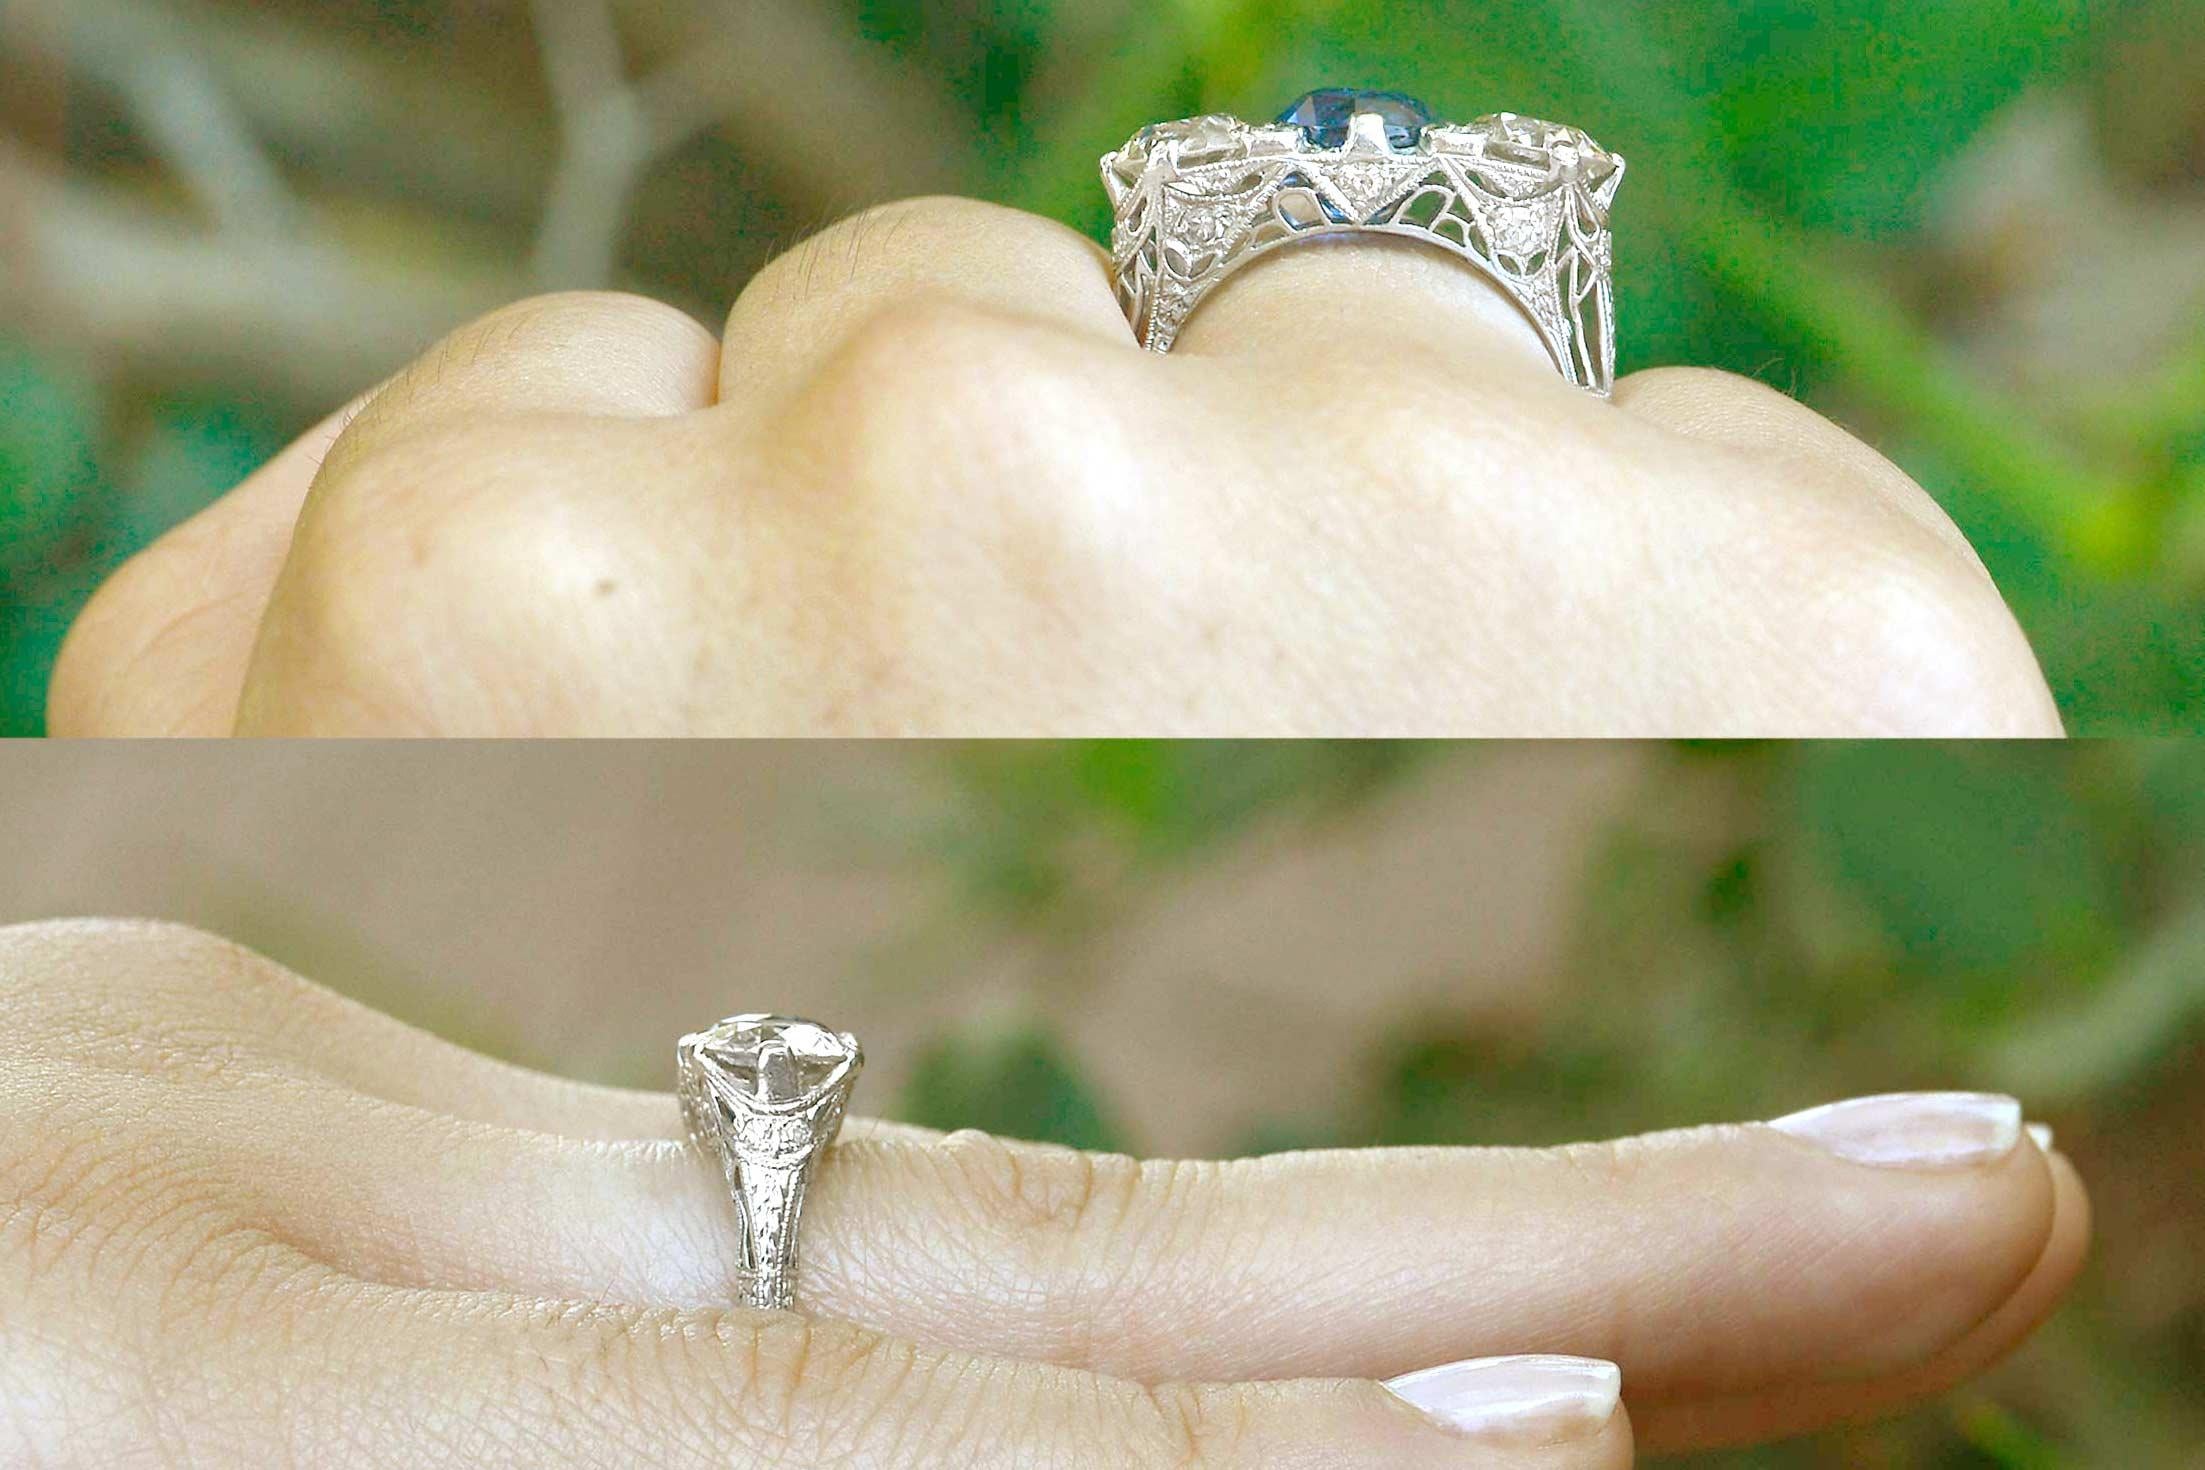 6 carat sapphire engagement ring